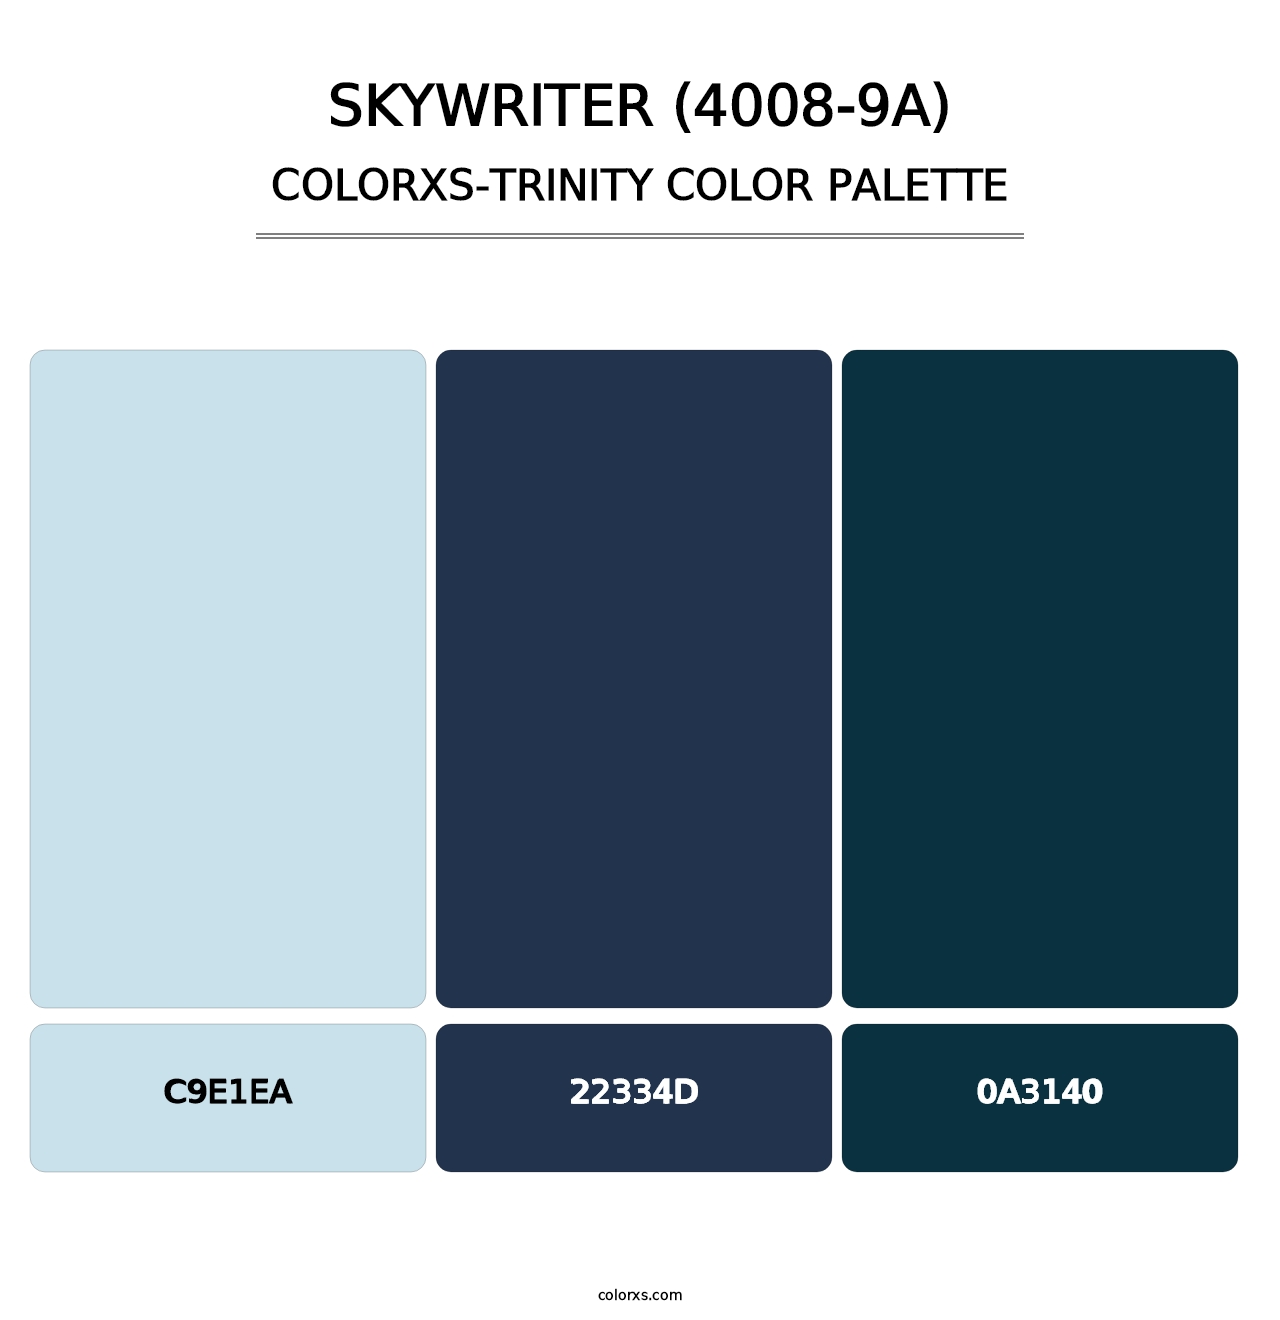 Skywriter (4008-9A) - Colorxs Trinity Palette